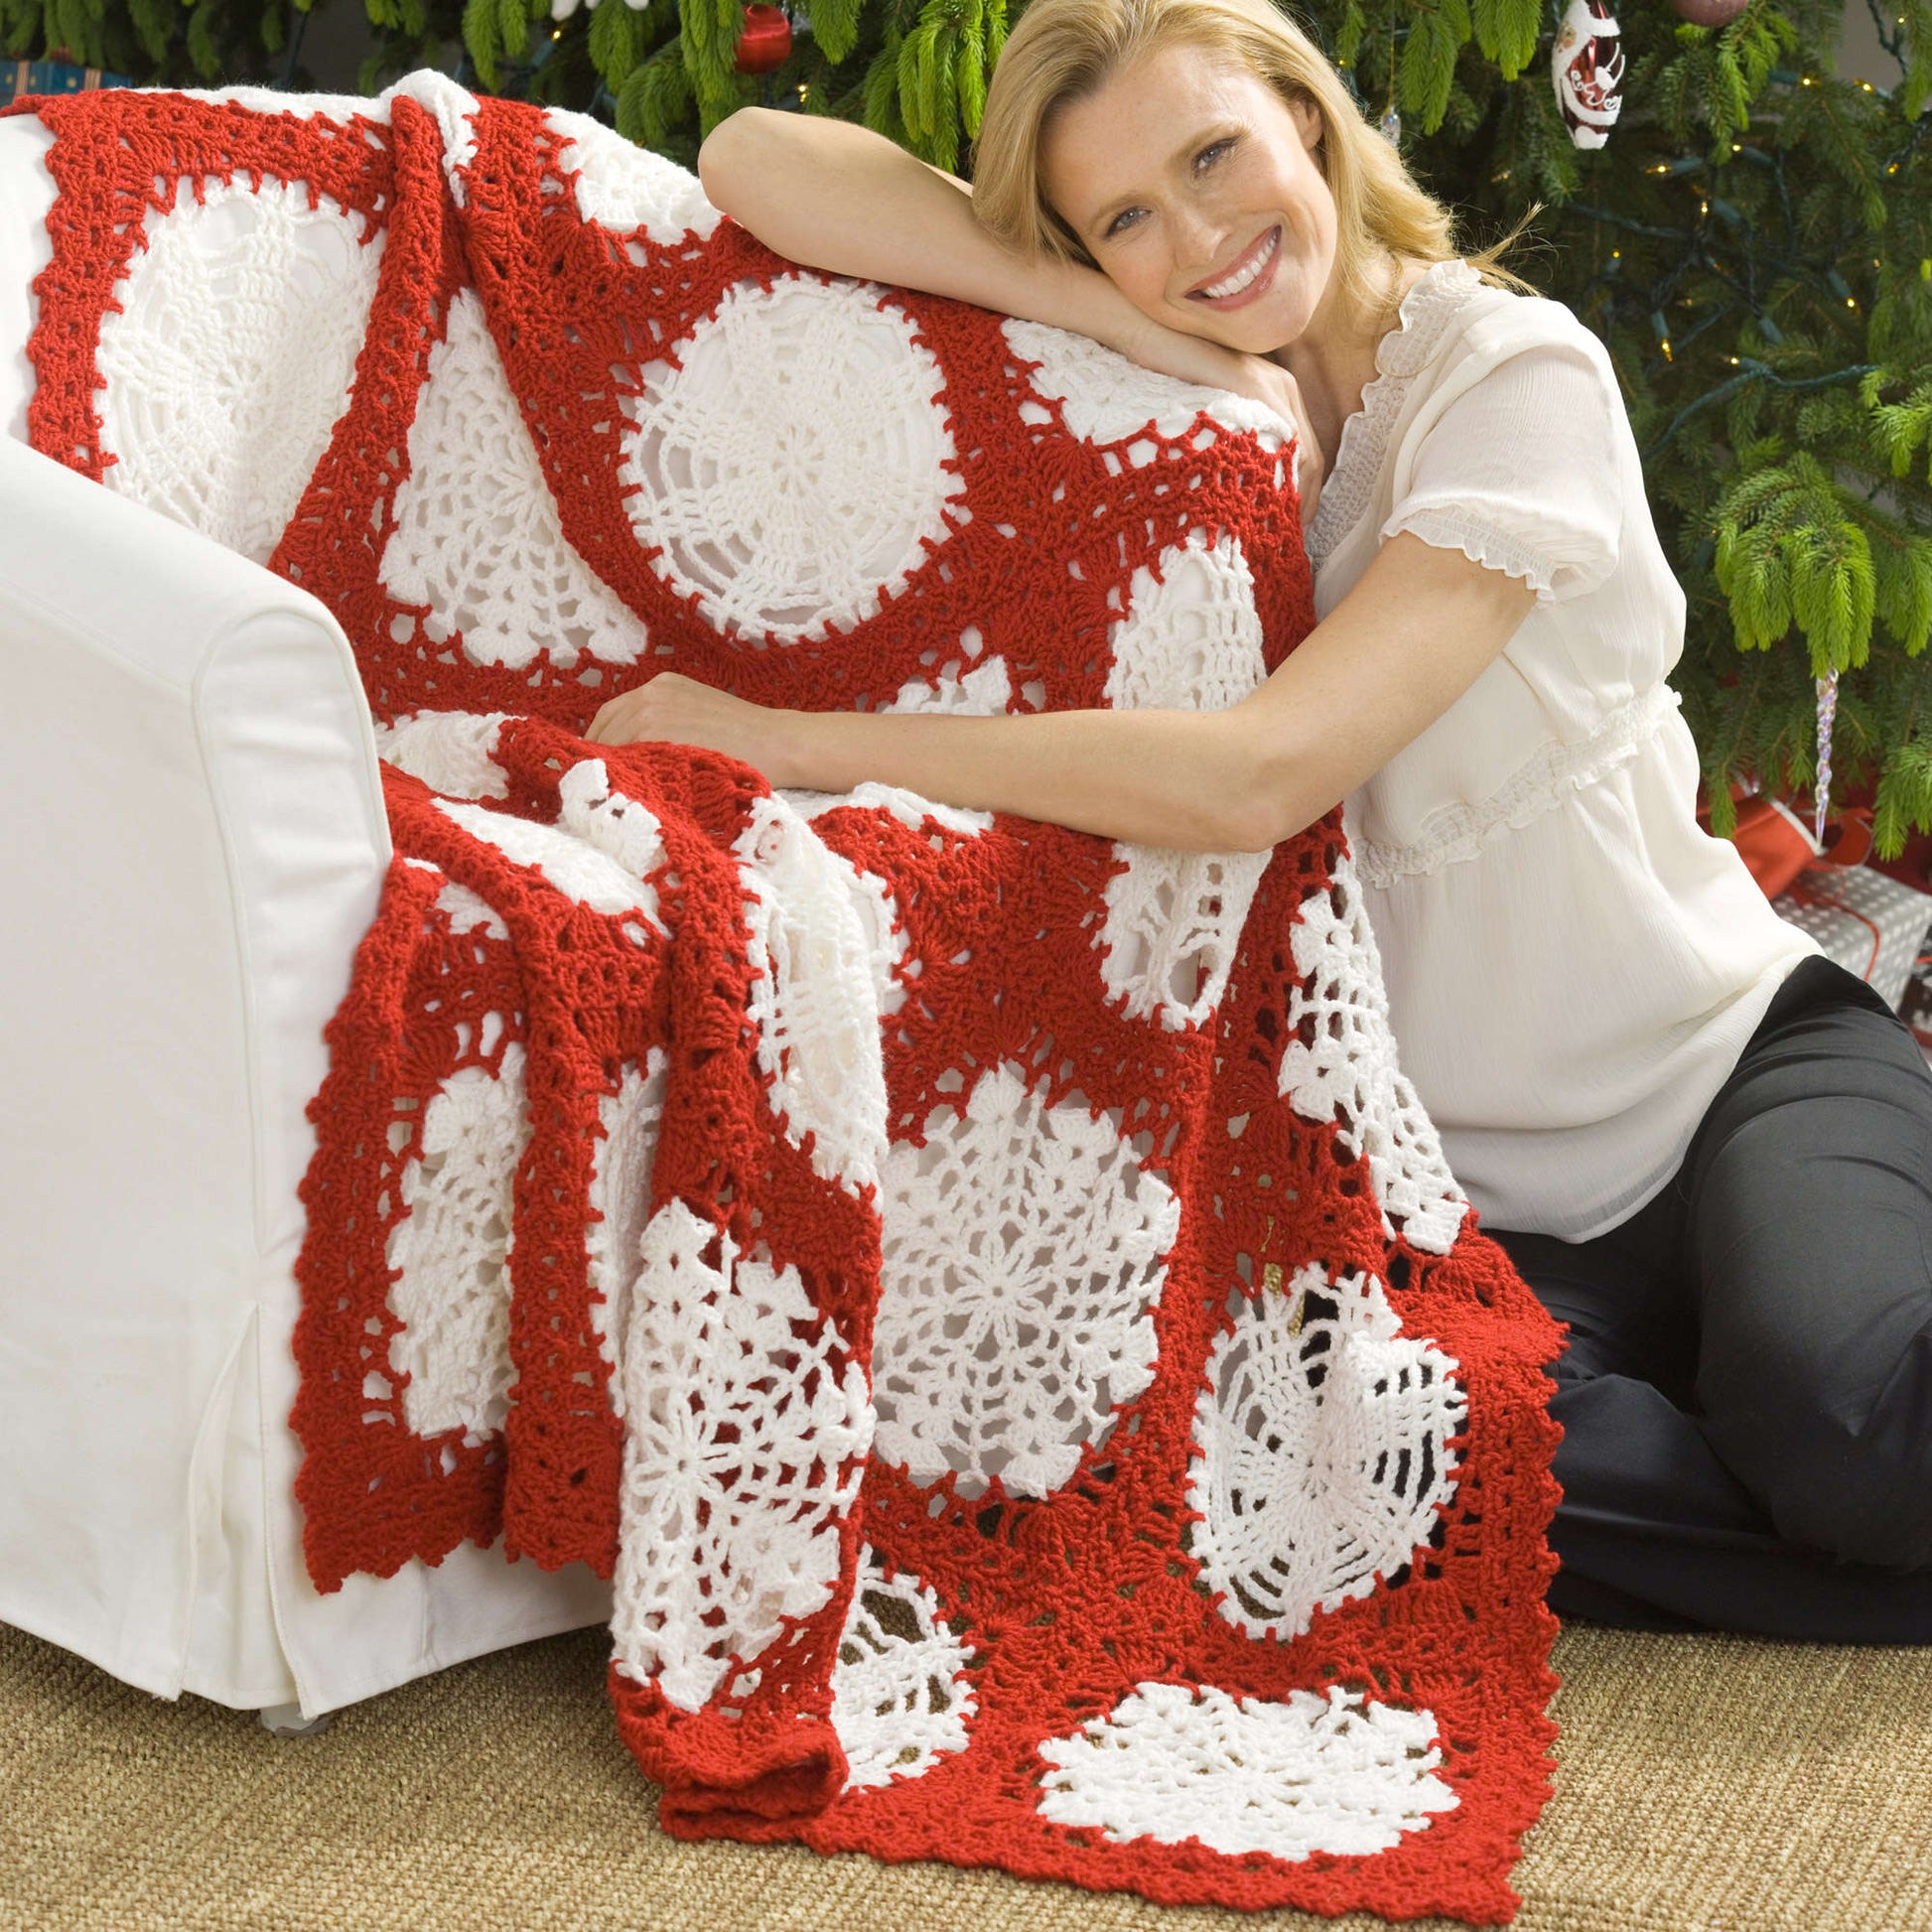 Red Heart Scandinavian Snowflake Throw Crochet Blanket made in Red Heart Super Saver yarn